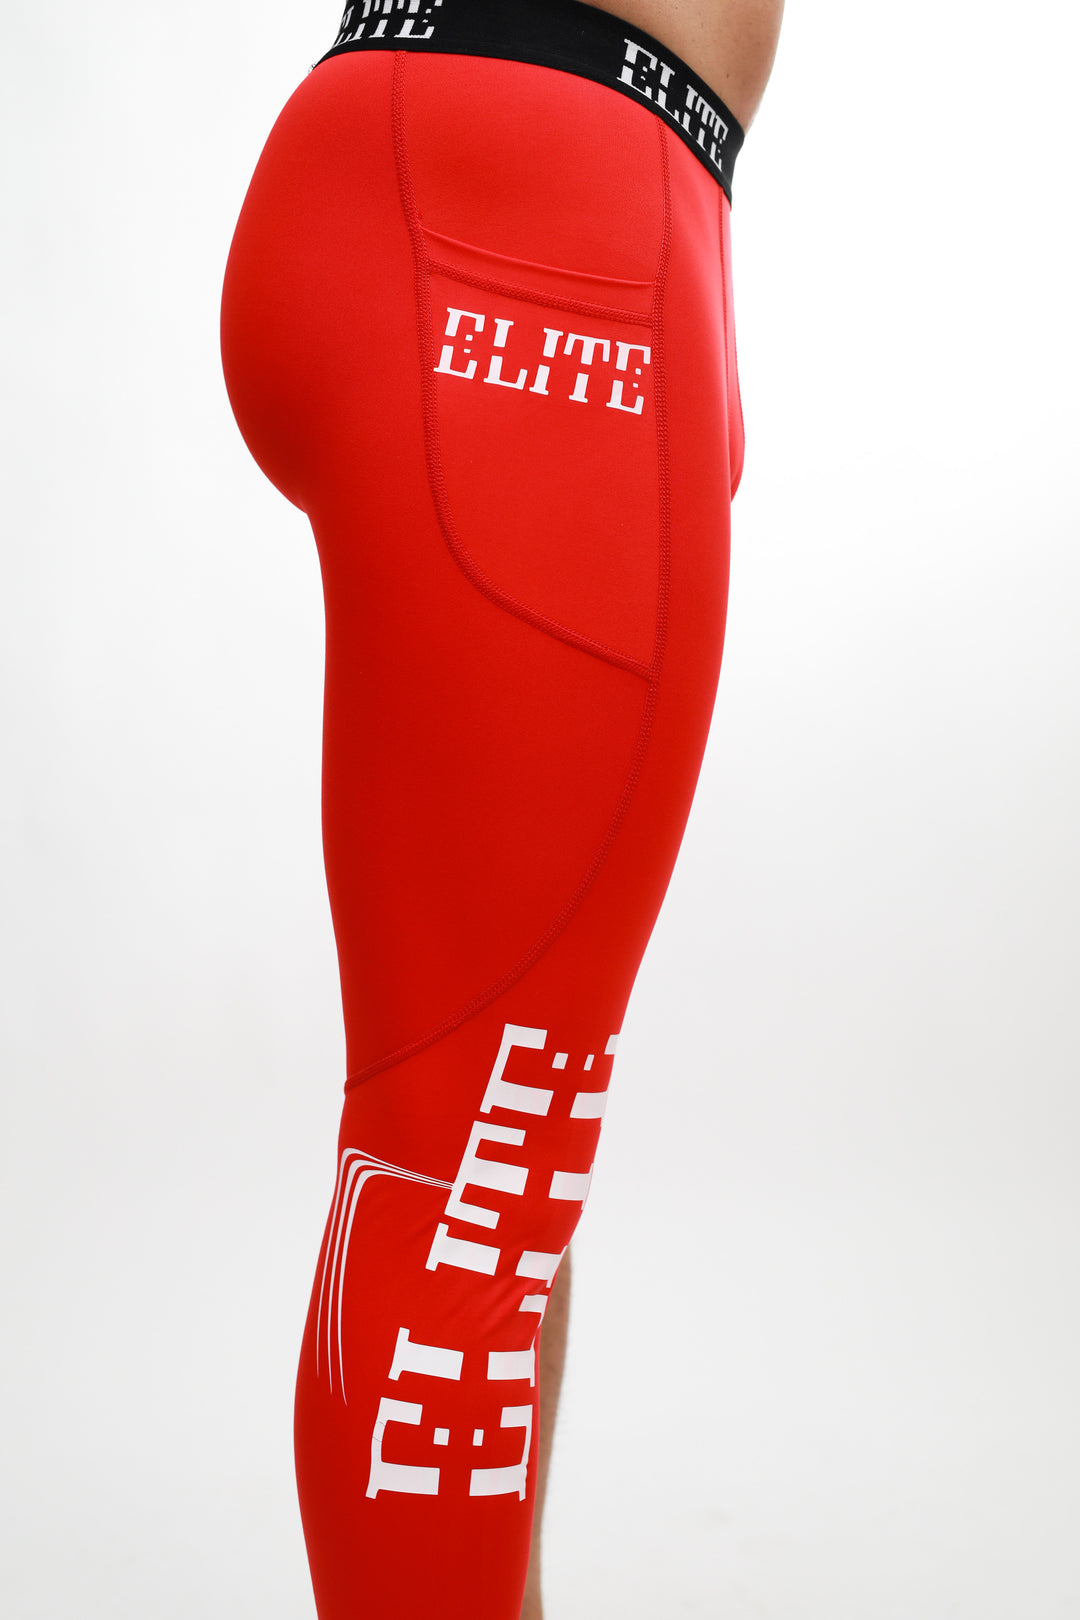 Elite One Legged  Tights - Red